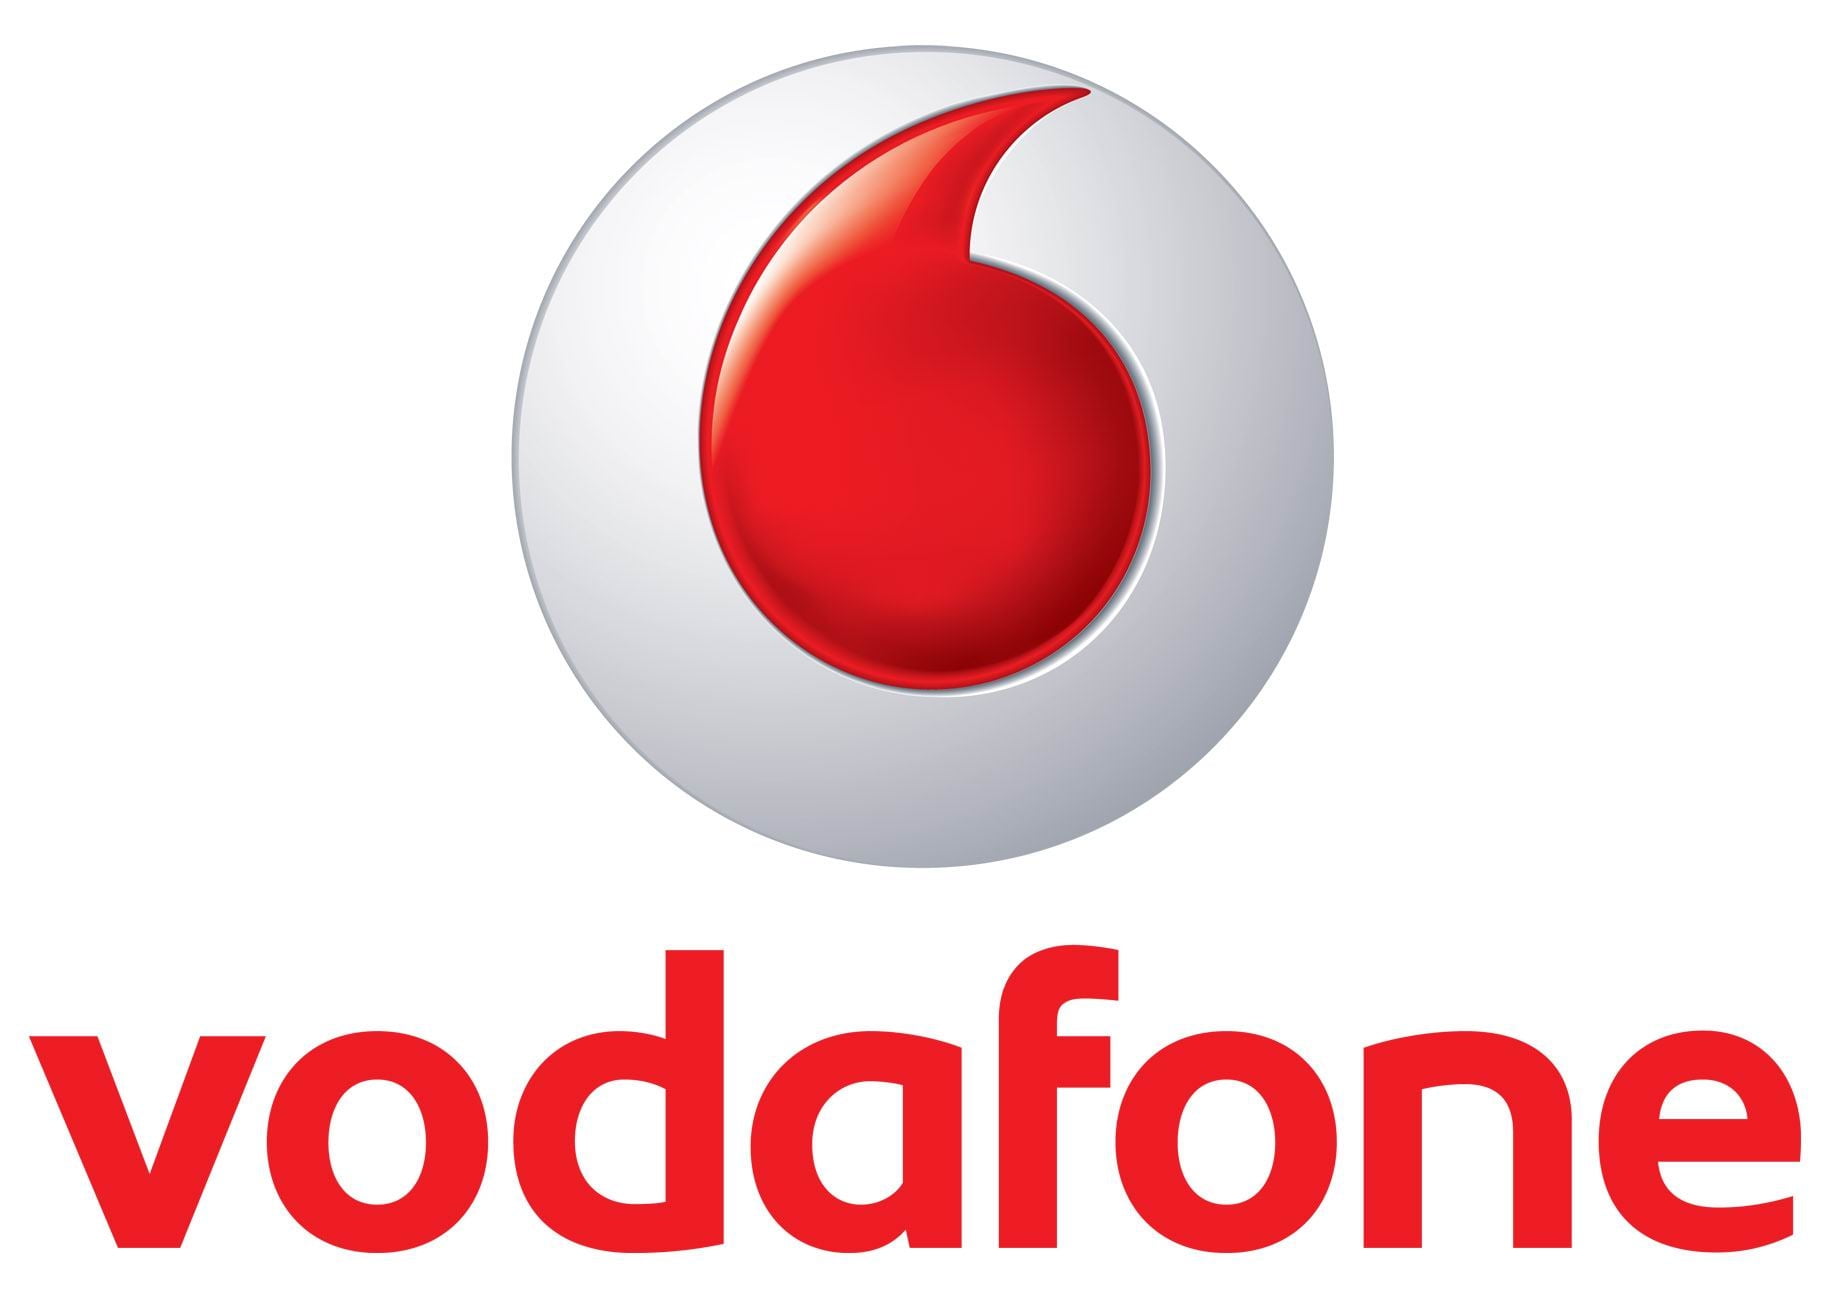 Vodafone logo, telecommunications company, background, character